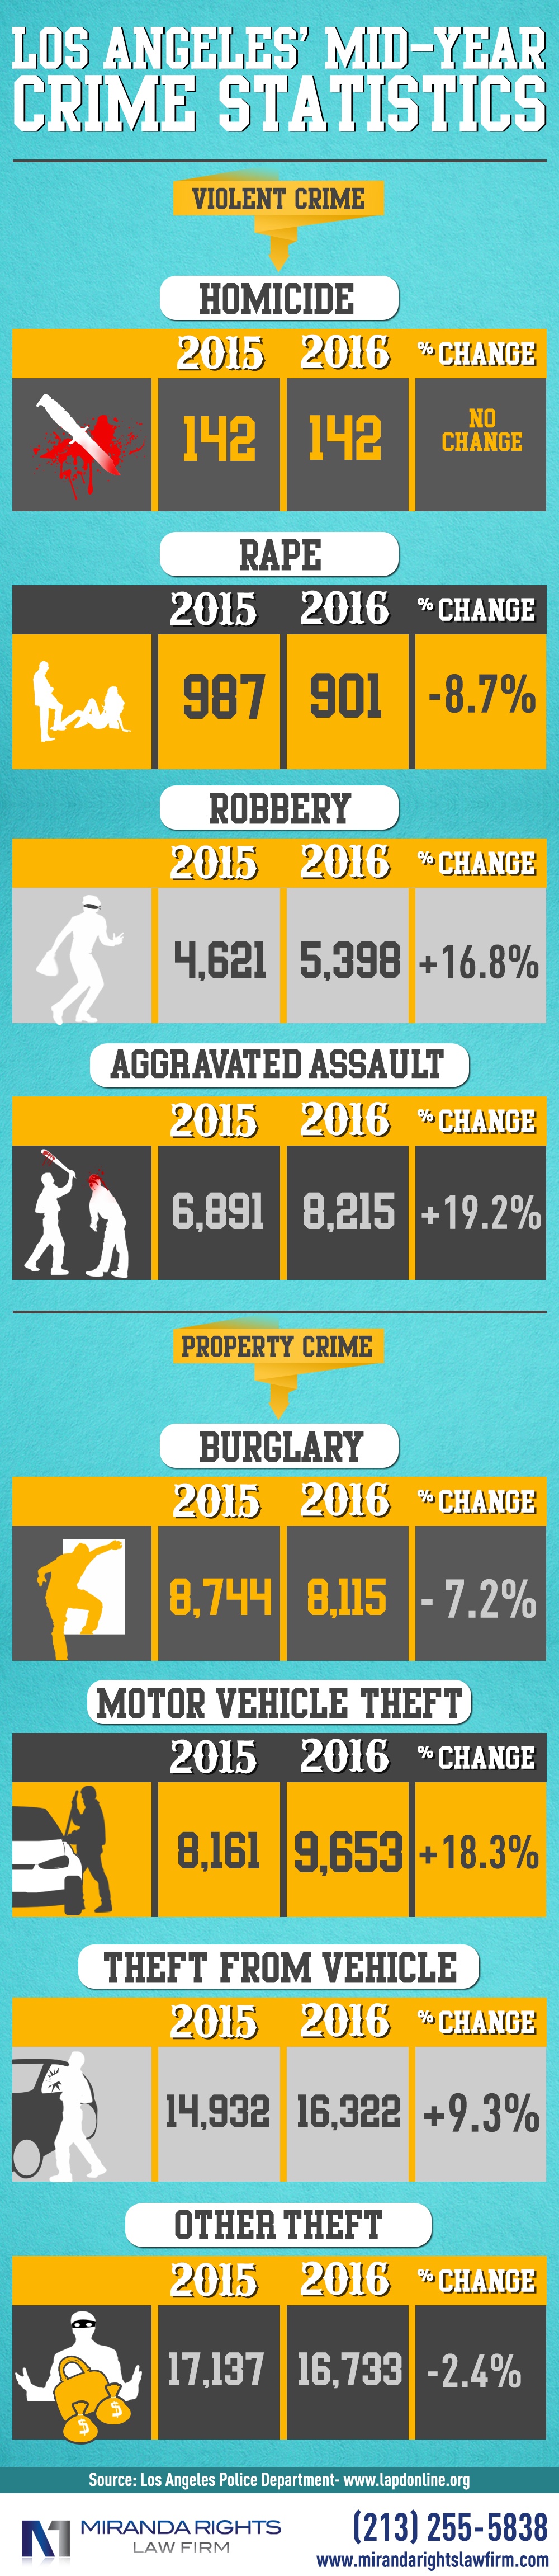 los-angeles-mid-year-crime-statistics